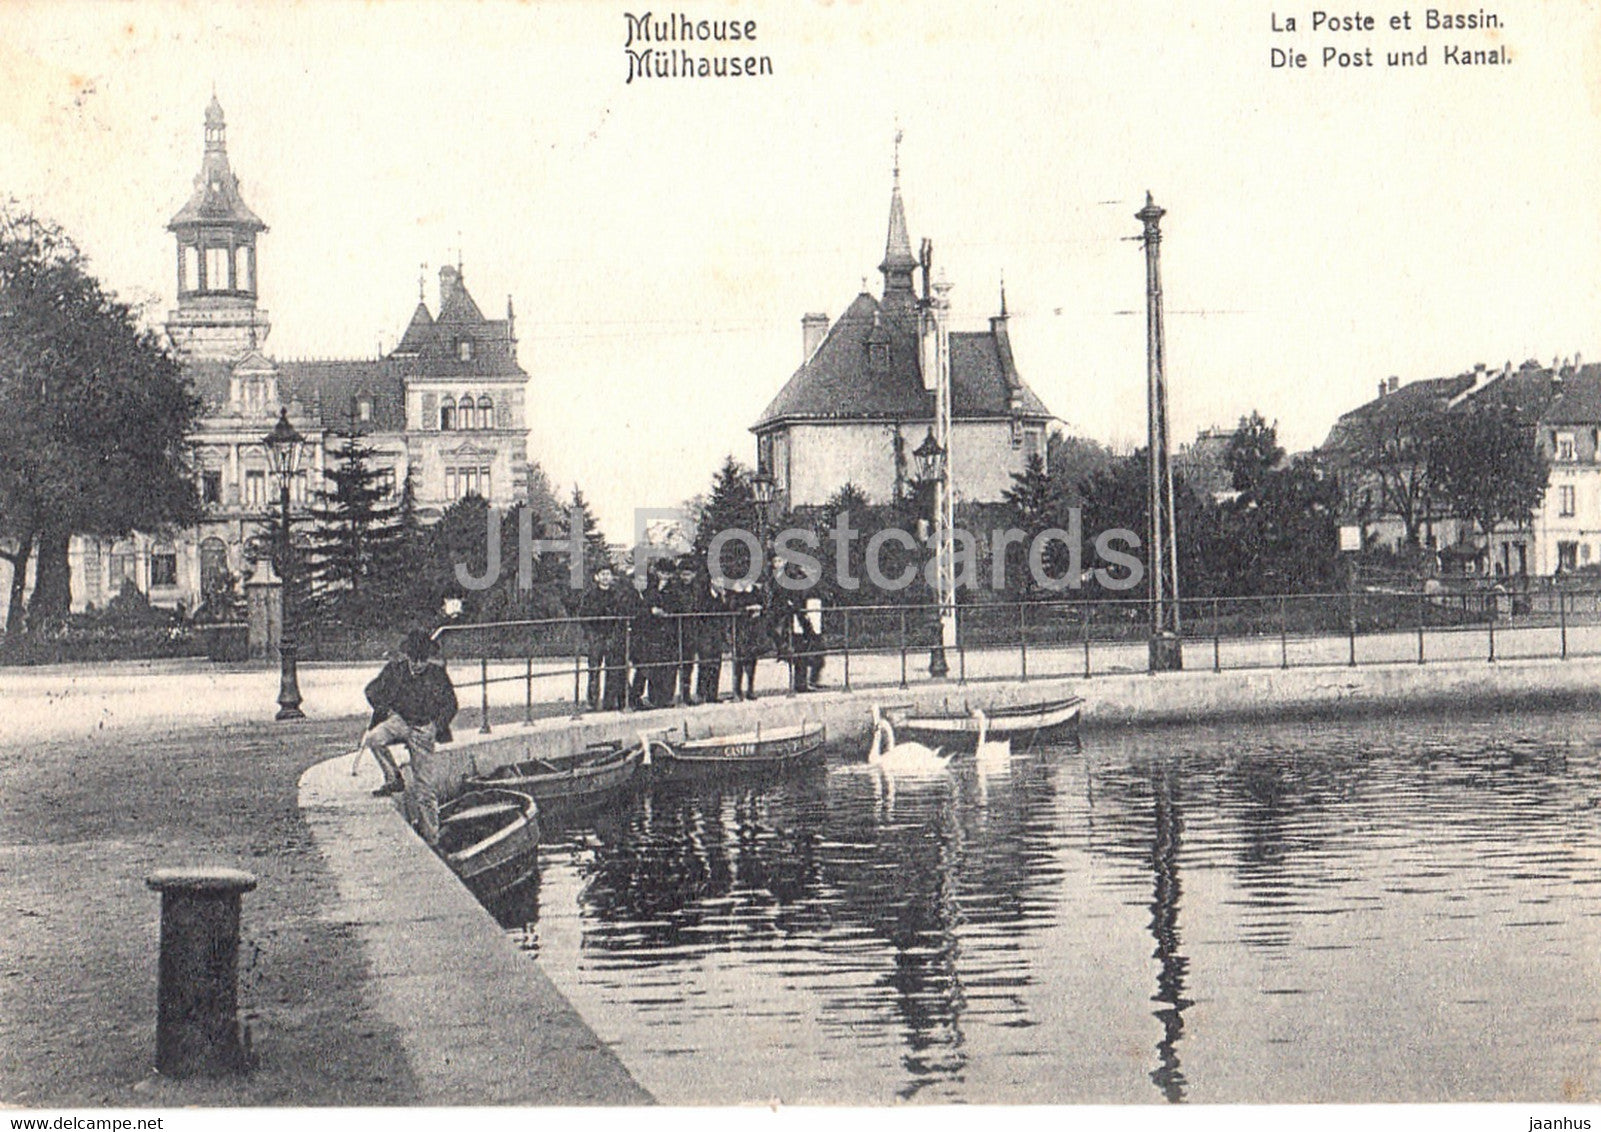 Mulhausen i Els - Mulhouse - La Poste et Bassin - Die Post und Kanal - old postcard - 1907 - France - used - JH Postcards